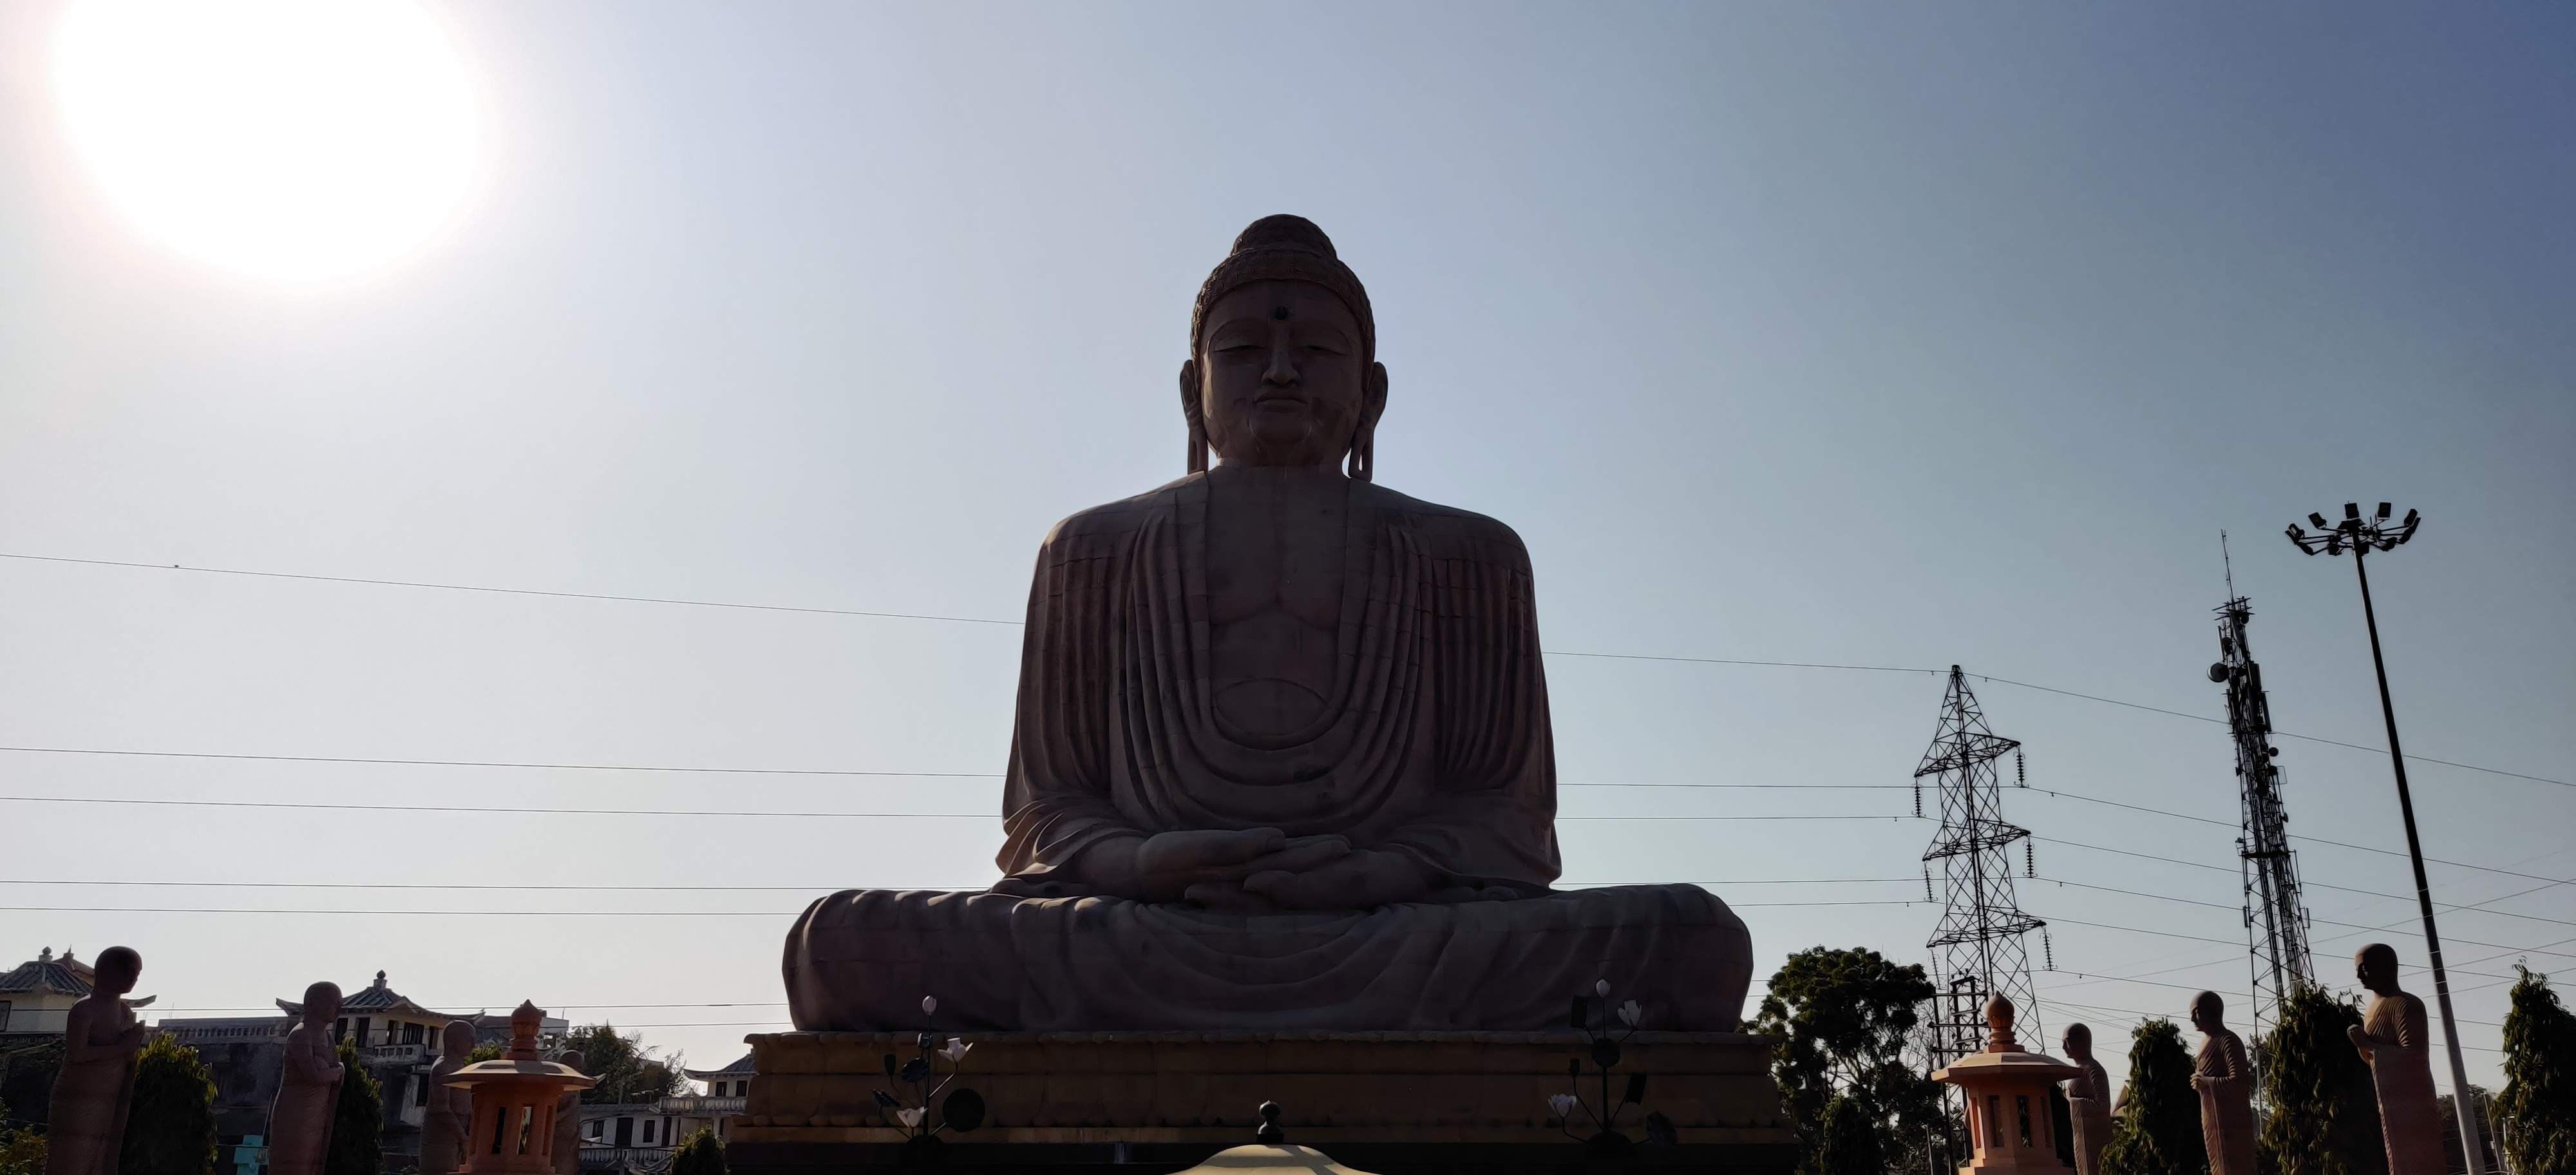 Great Buddha Statue, Bodh gaya, Bihar, India